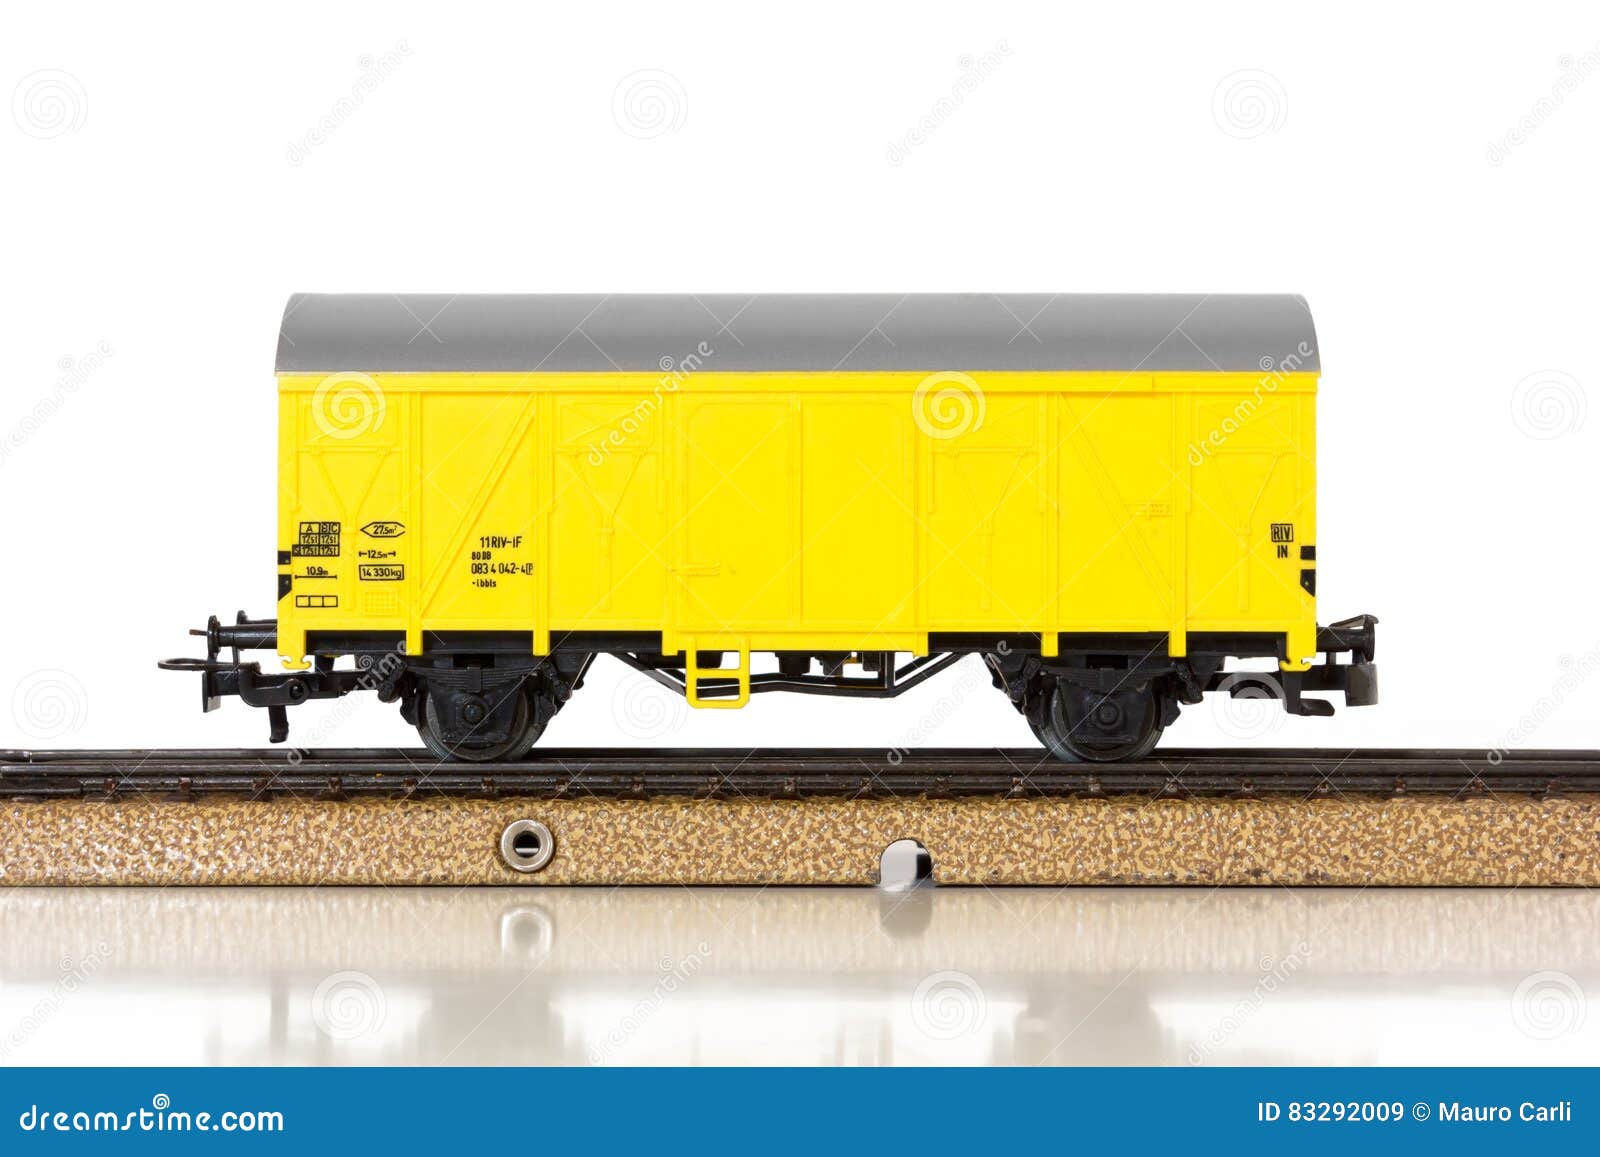 model train`s boxcar on the rails